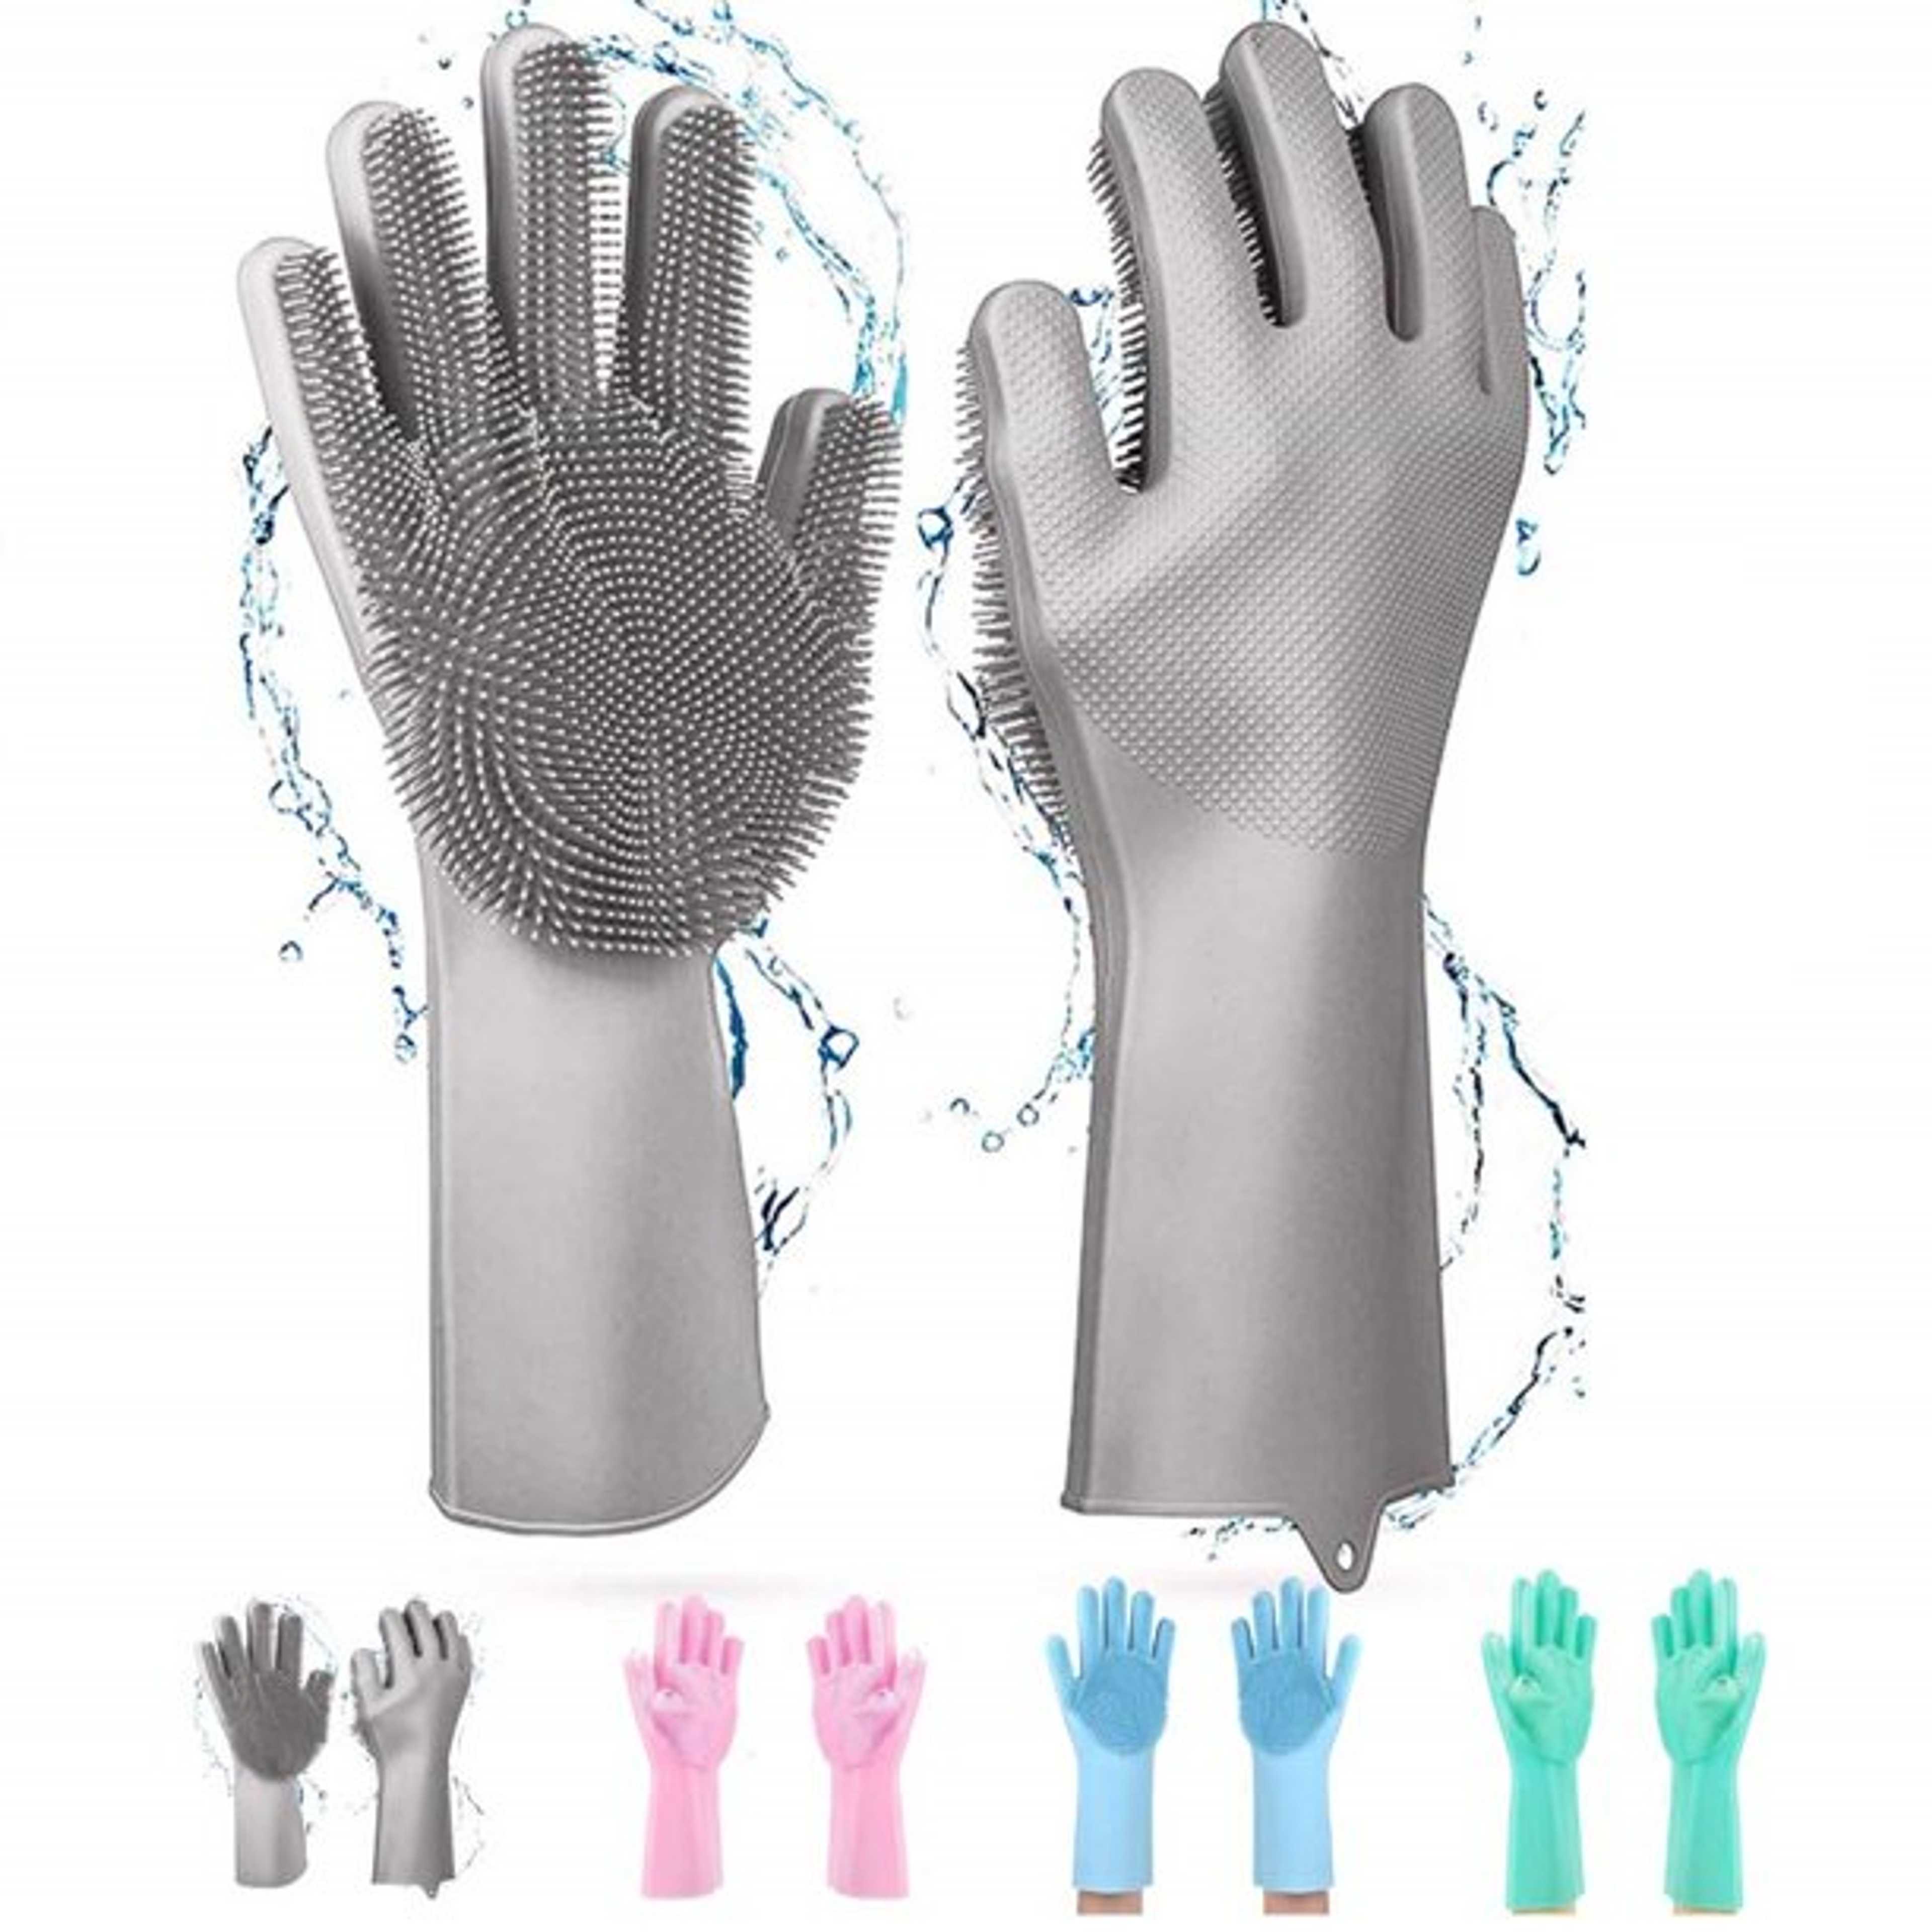 Dishwashing Cleaning Gloves 